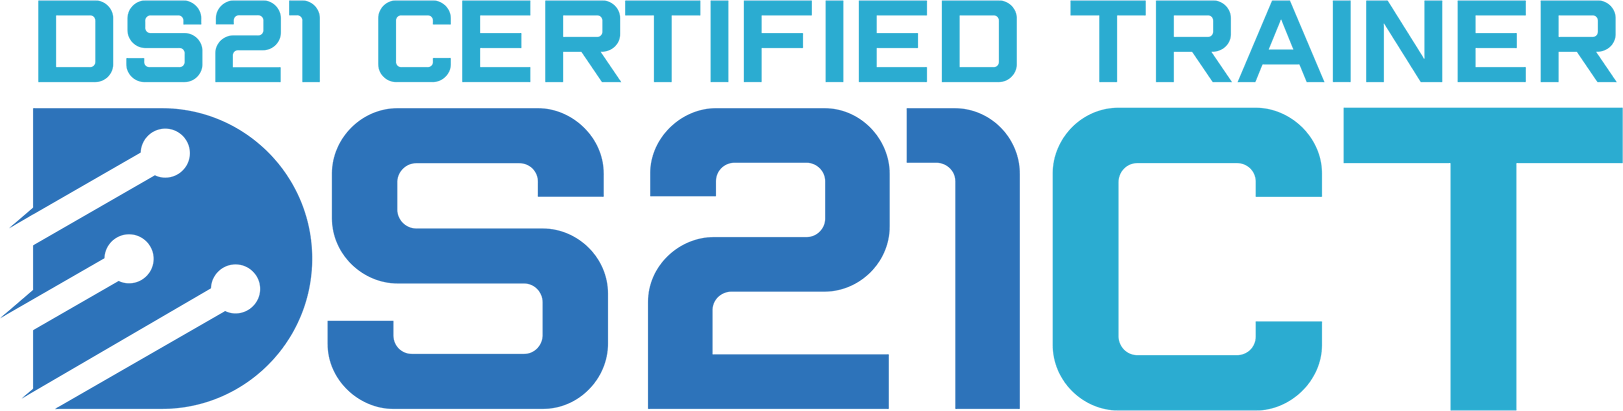 ds21ct-logo